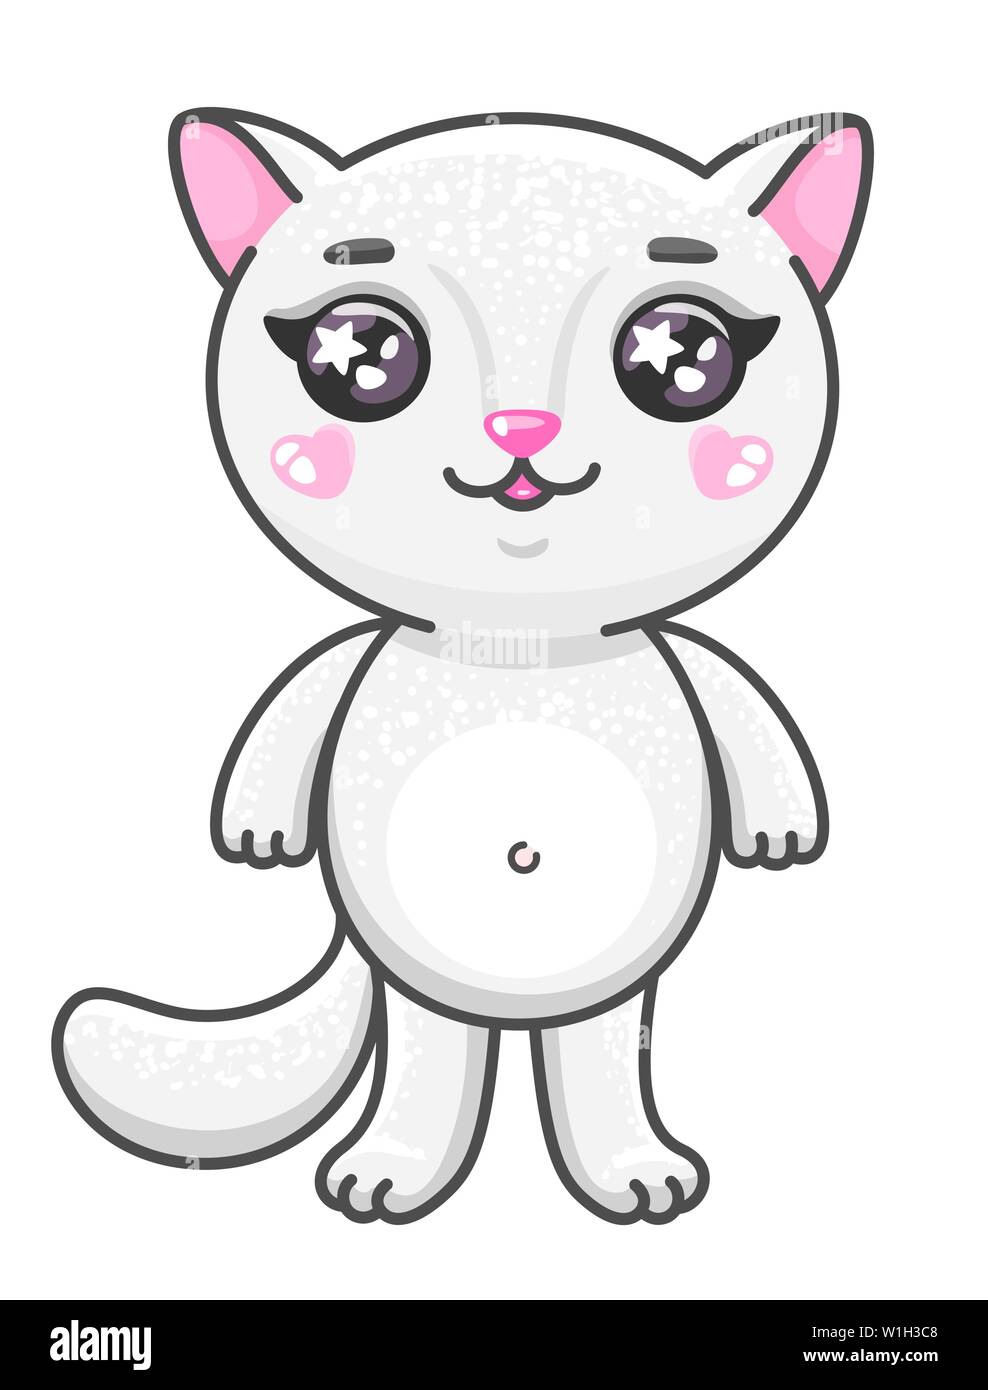 Kitty Cute cartoon vector illustration. Smiling baby kitty animal style kawaii dans isolé sur fond blanc. Illustration de Vecteur